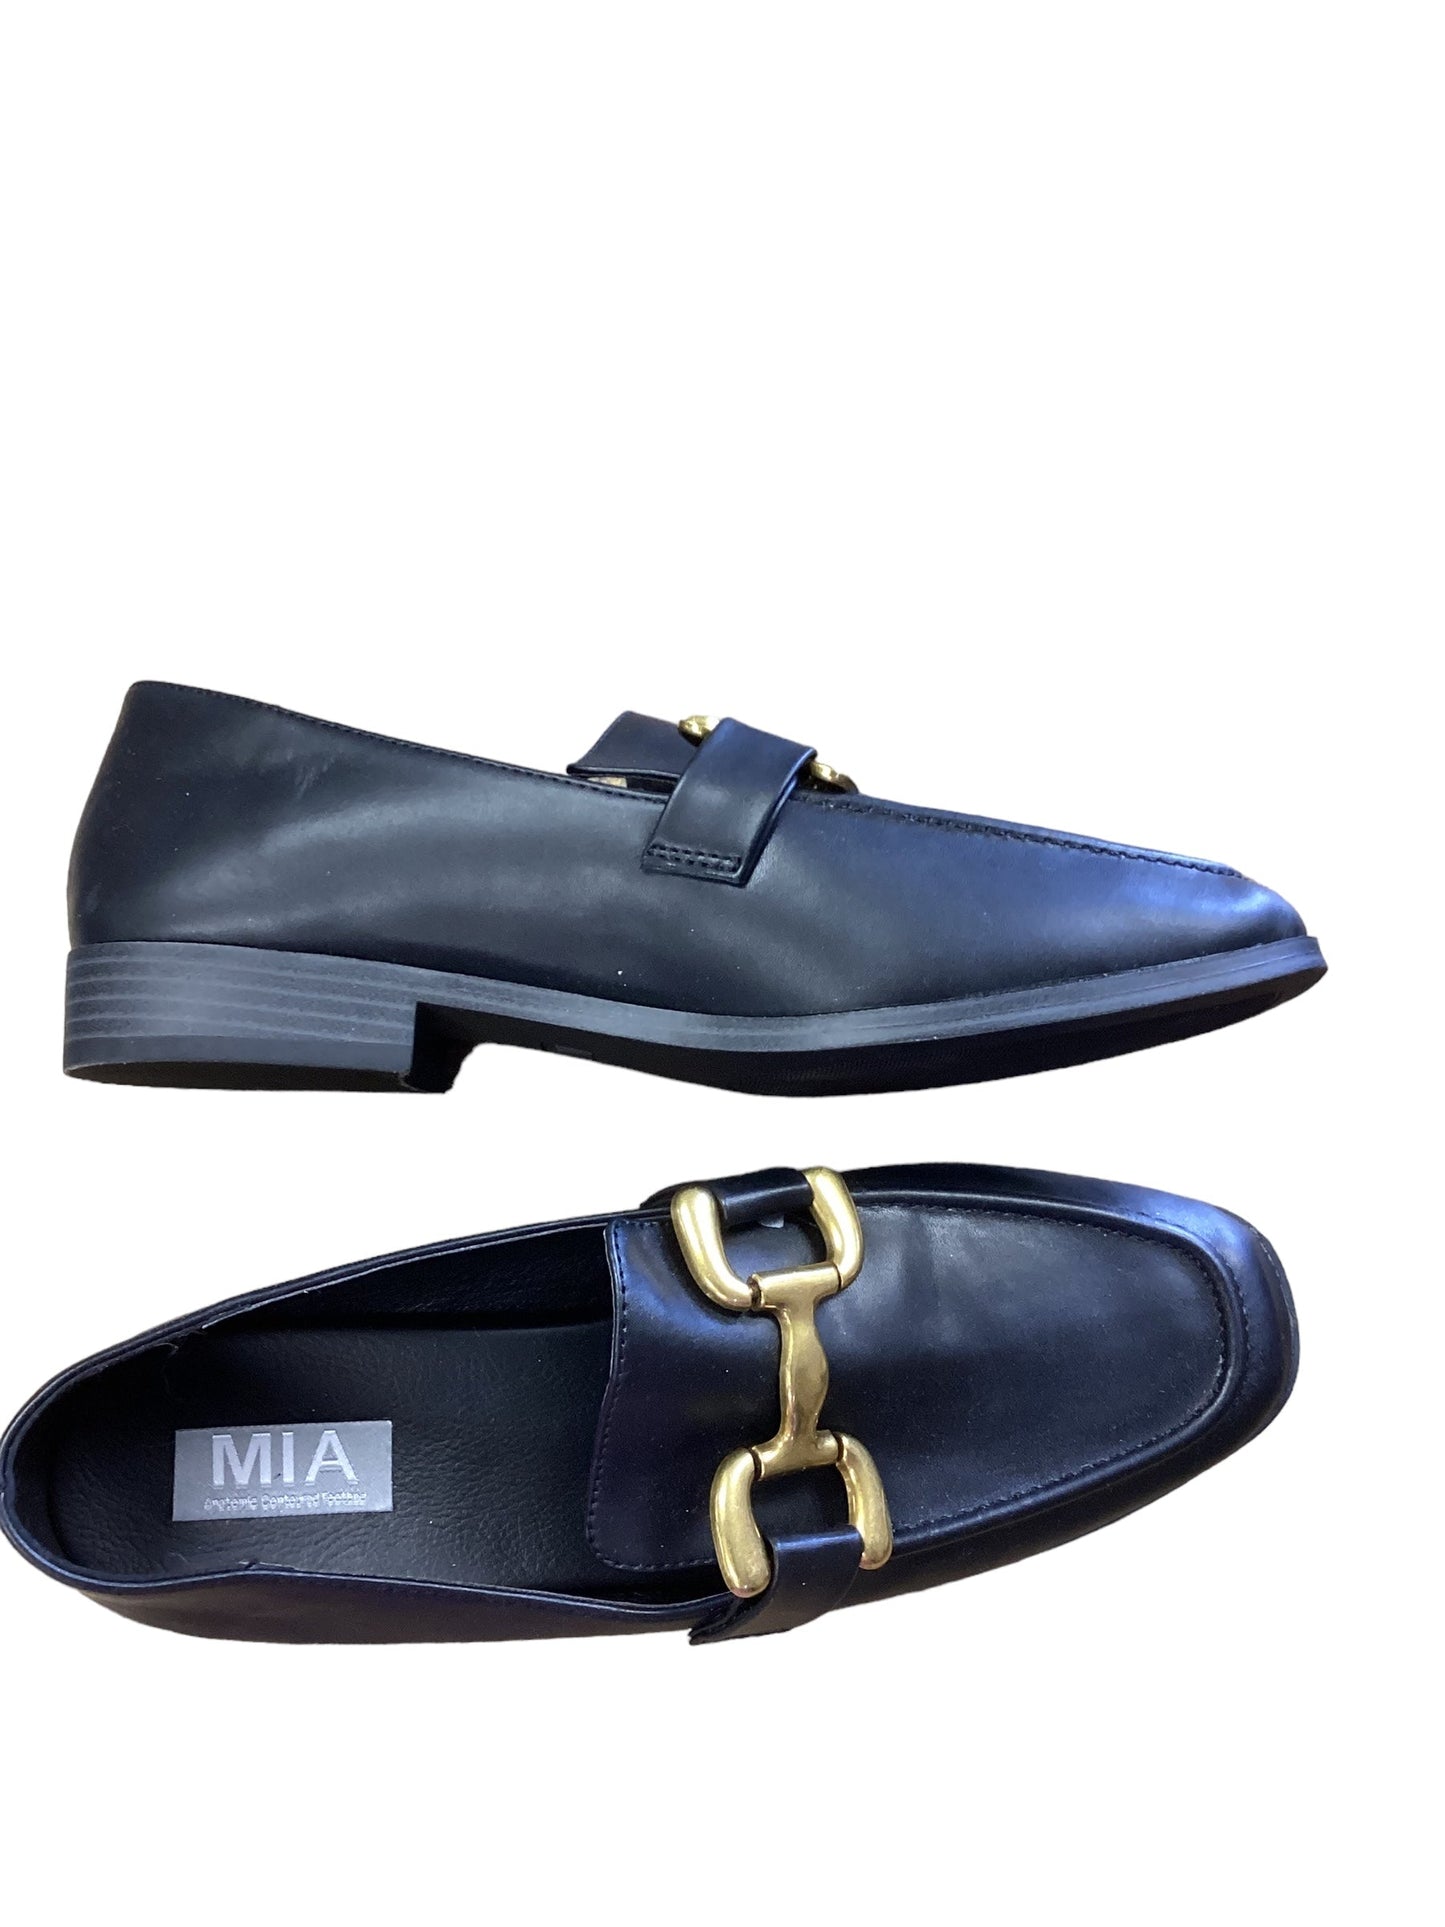 Black Shoes Flats Mia, Size 9.5